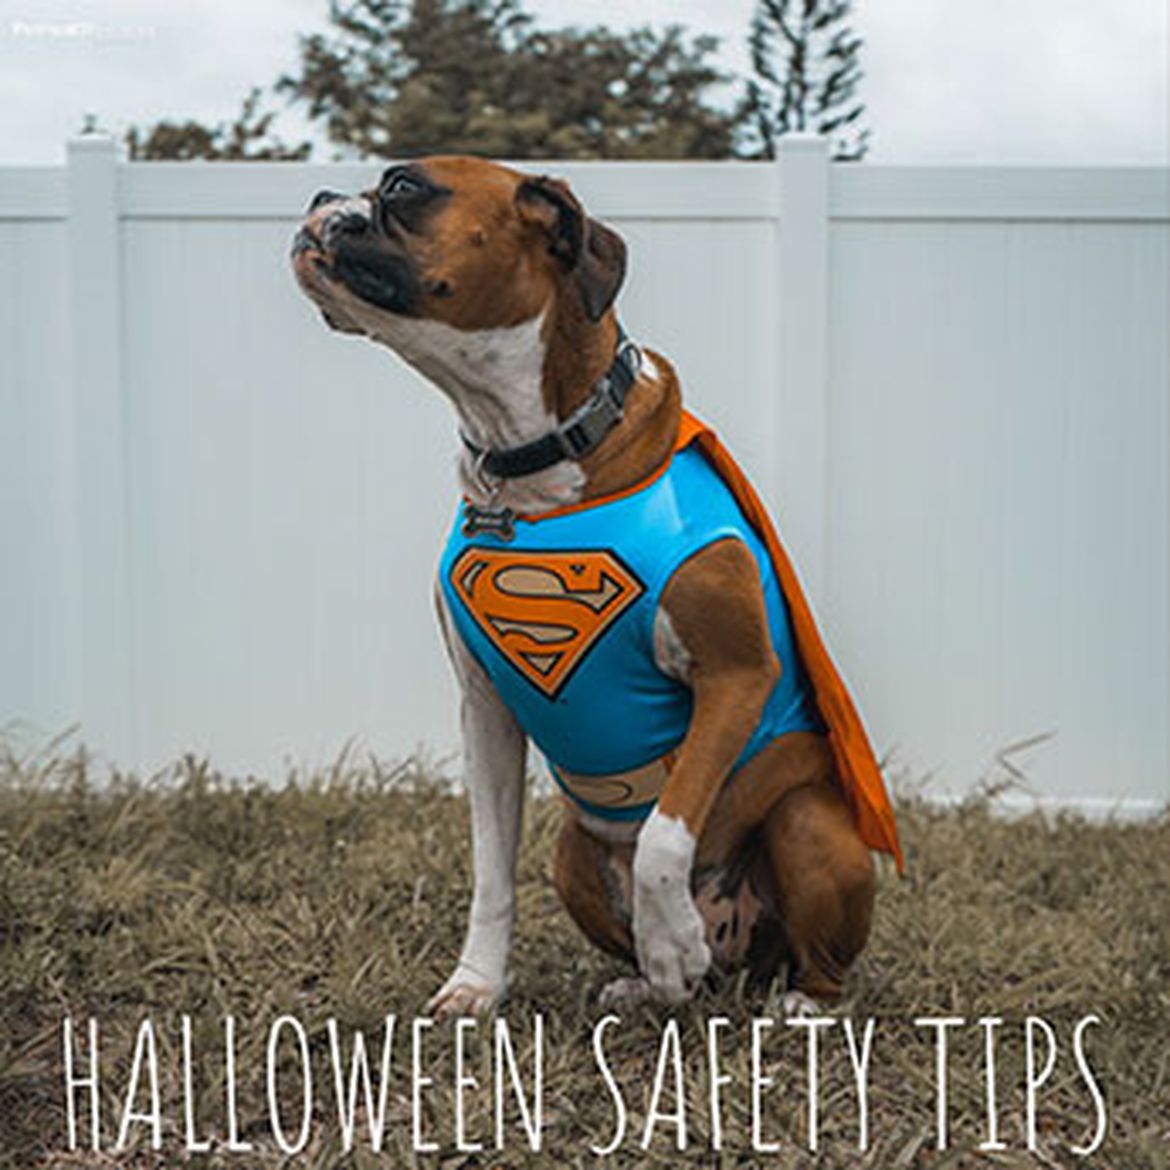 Social media post for Halloween safety tips